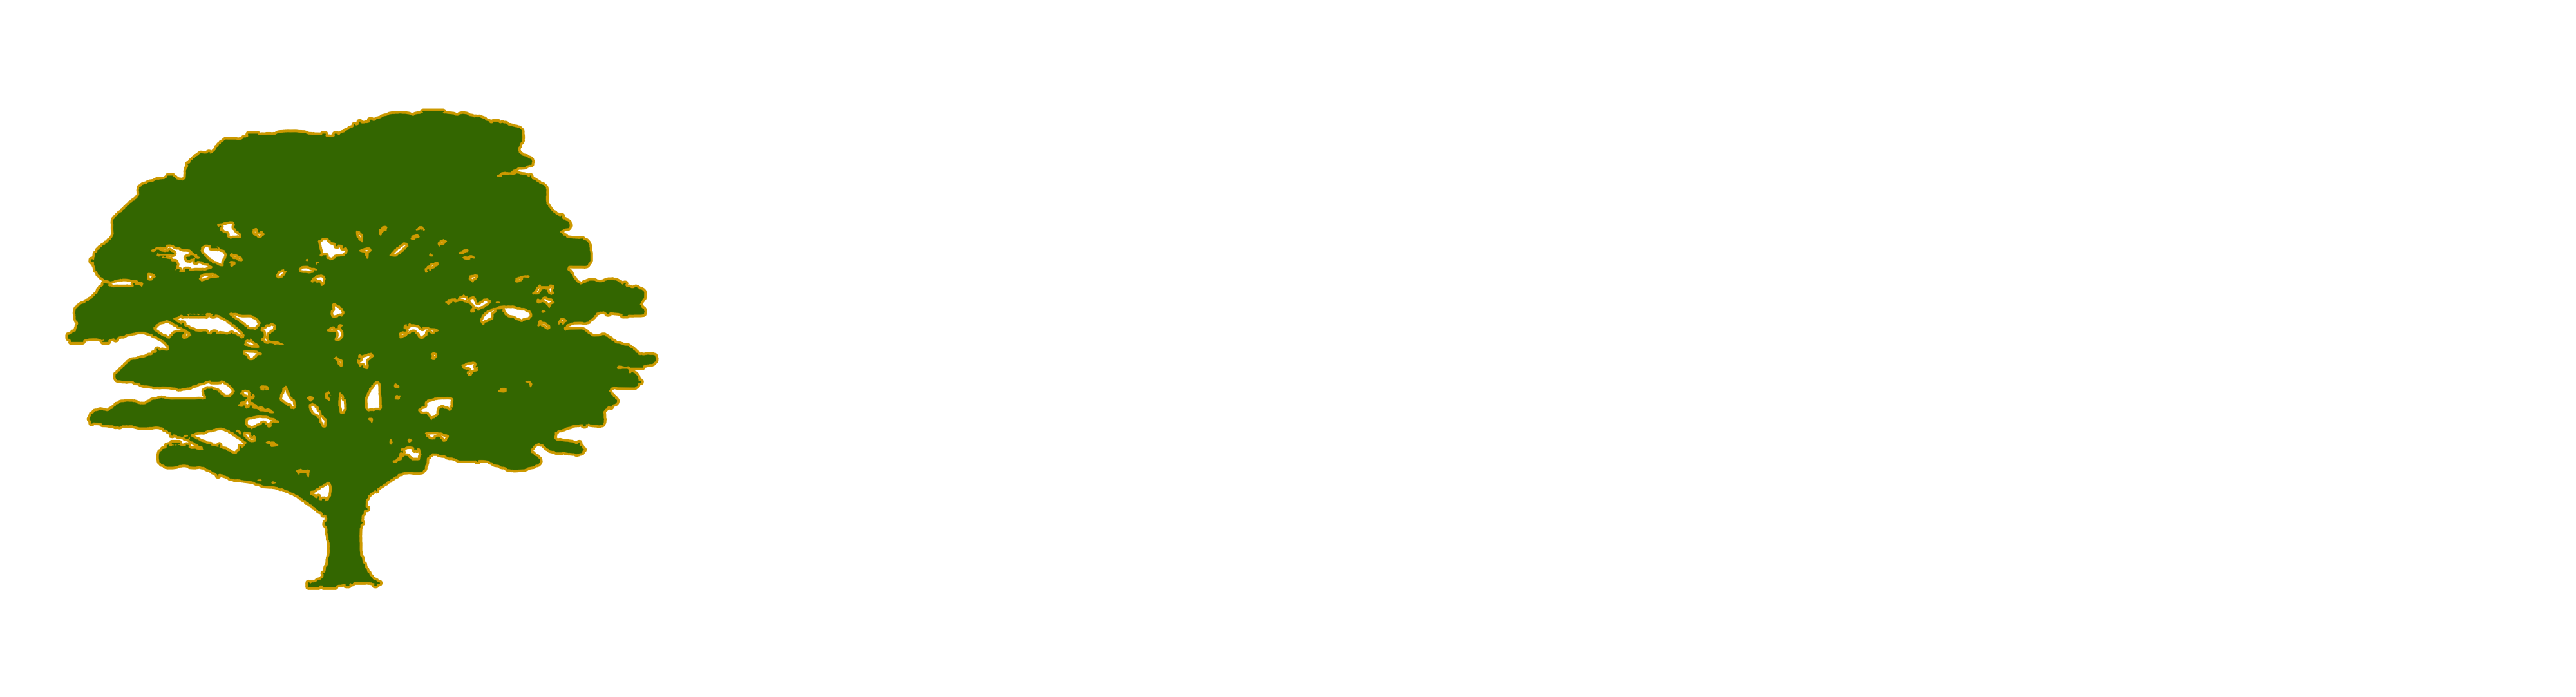 pecan_grill_logo